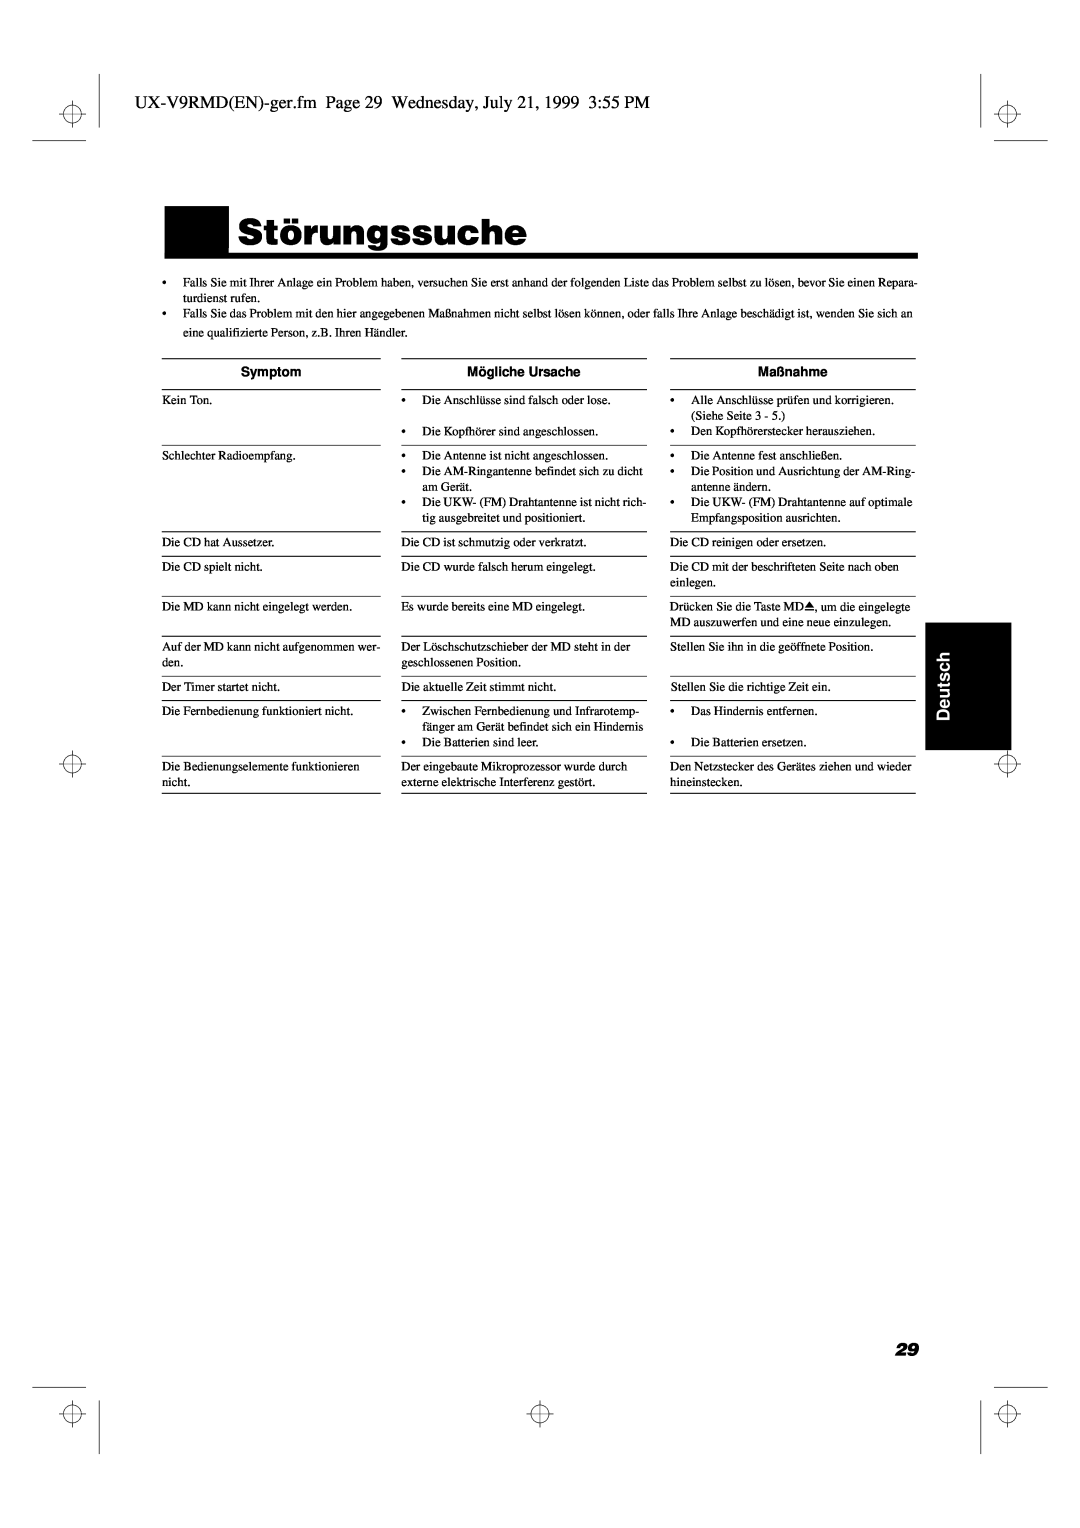 JVC UX-V9RMD manual Störungssuche, Deutsch, Symptom, Mögliche Ursache, Maßnahme 